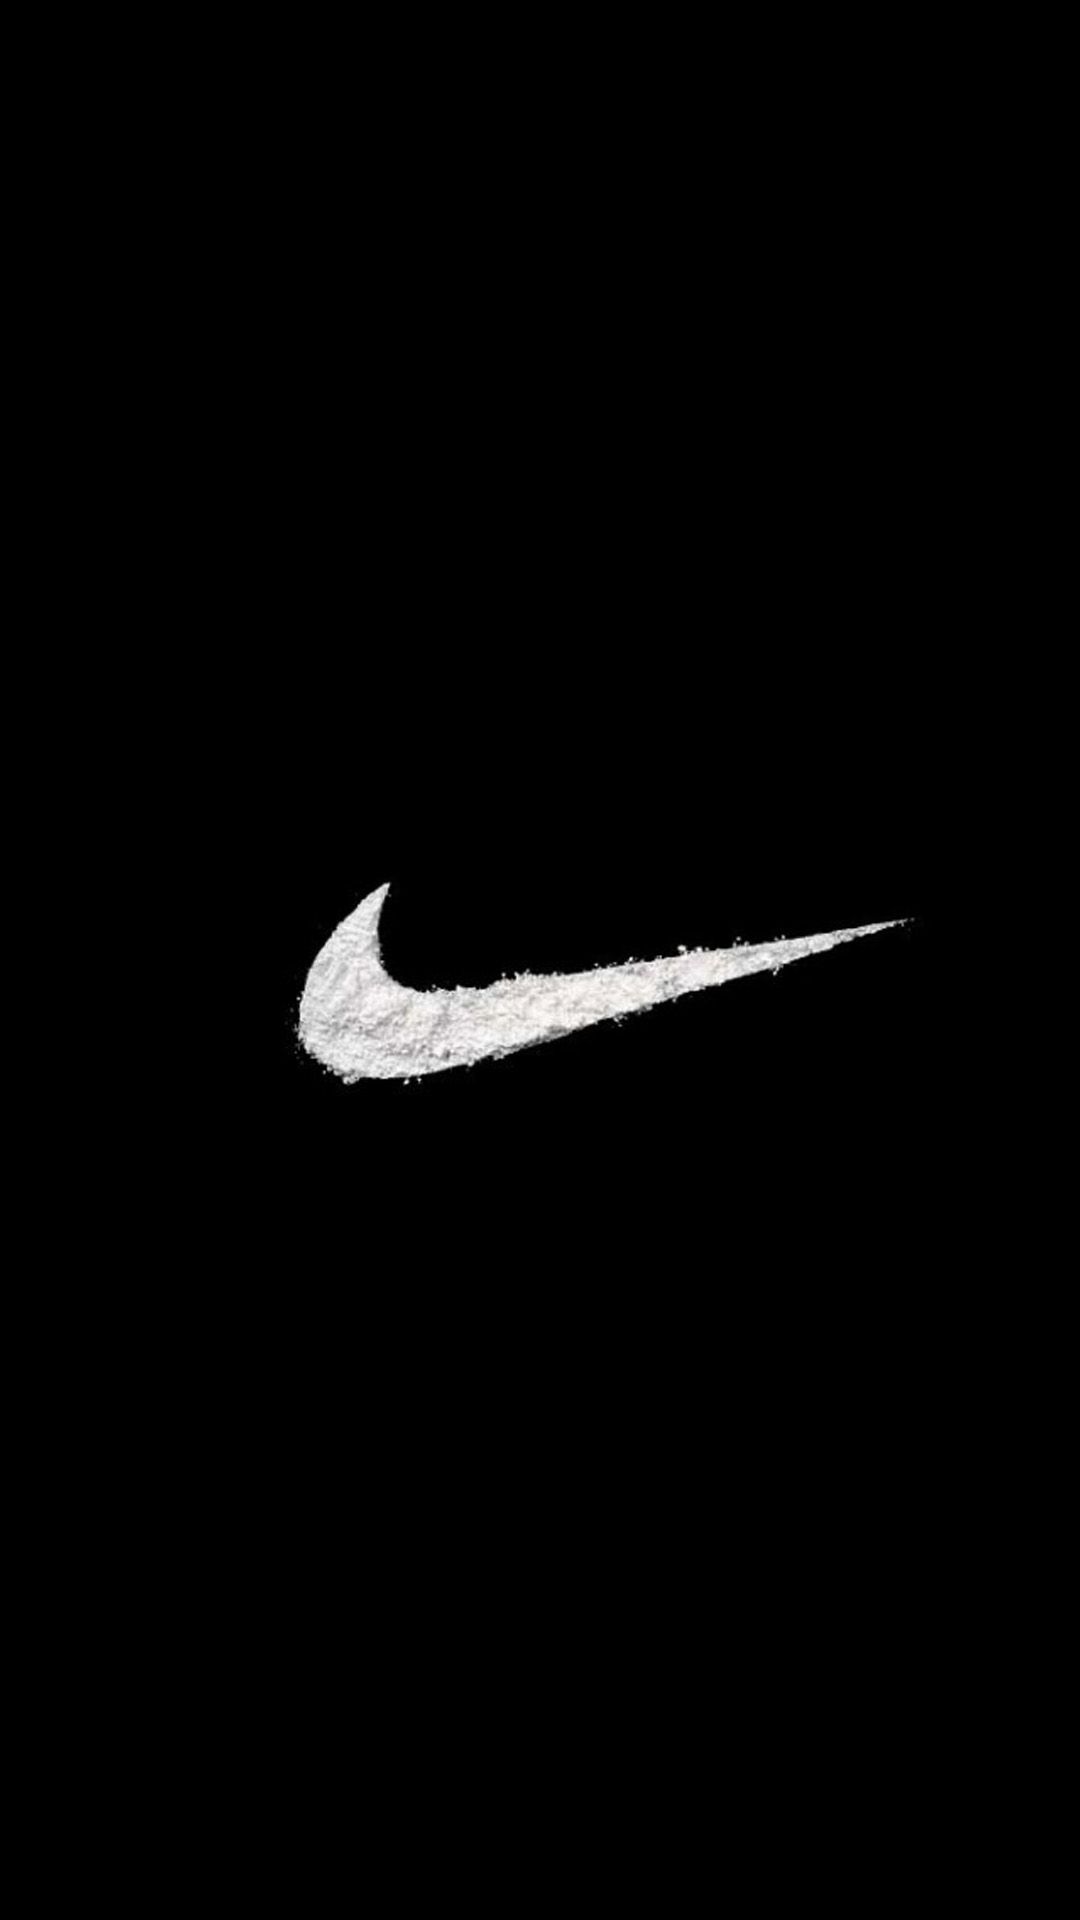 The nike logo in black and white - Nike